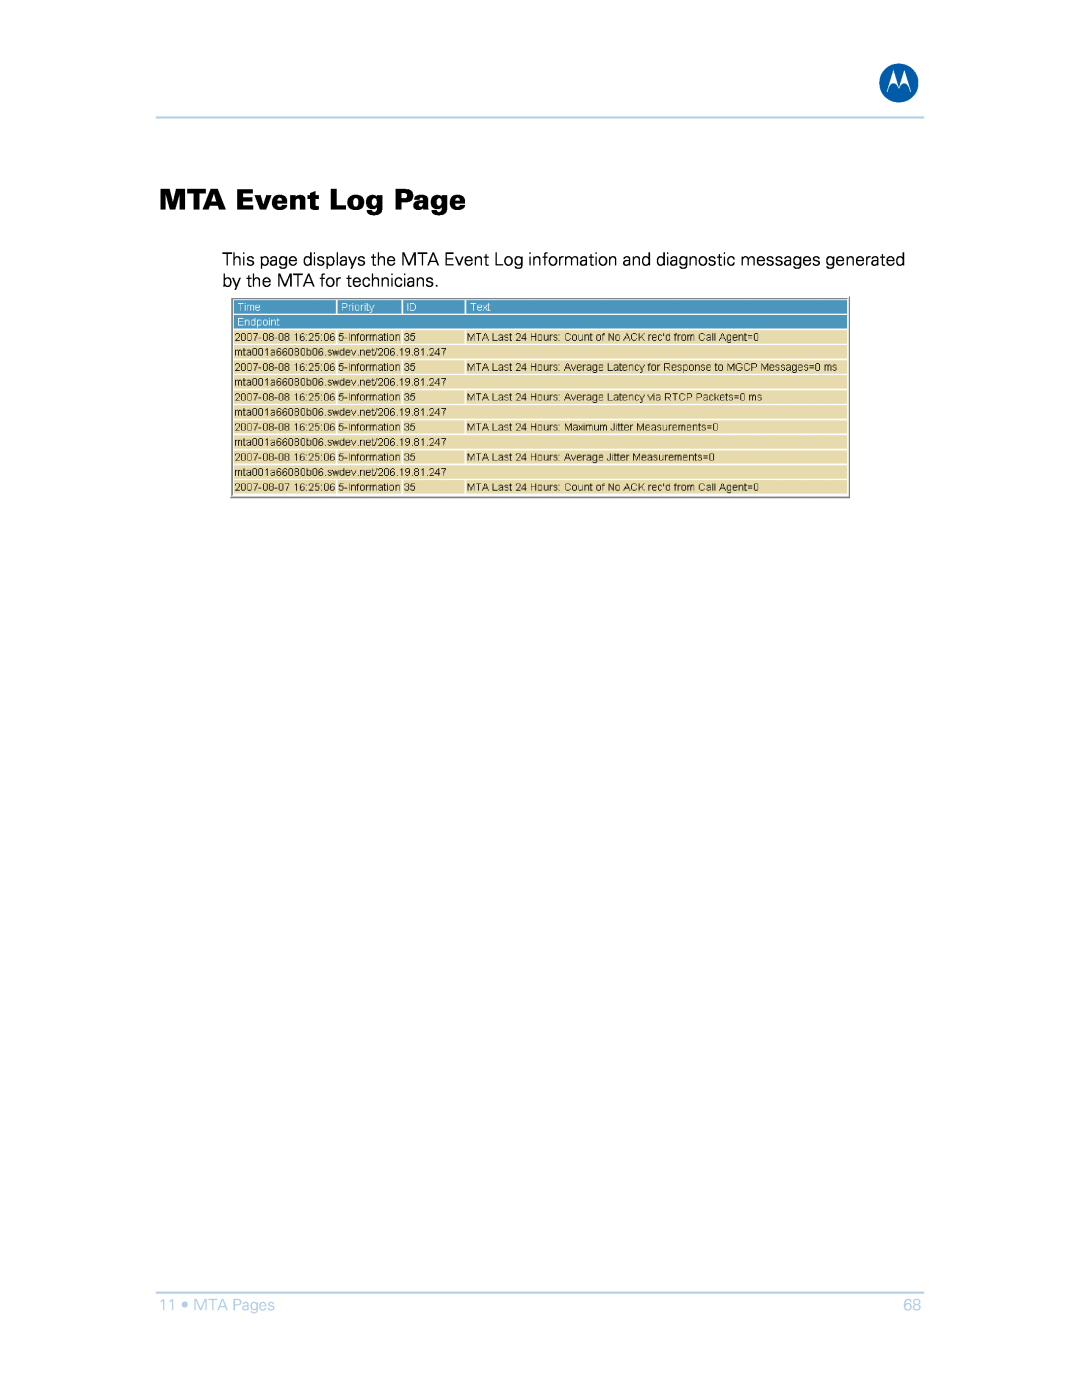 Motorola SVG1501UE, SVG1501E manual MTA Event Log Page, MTA Pages 